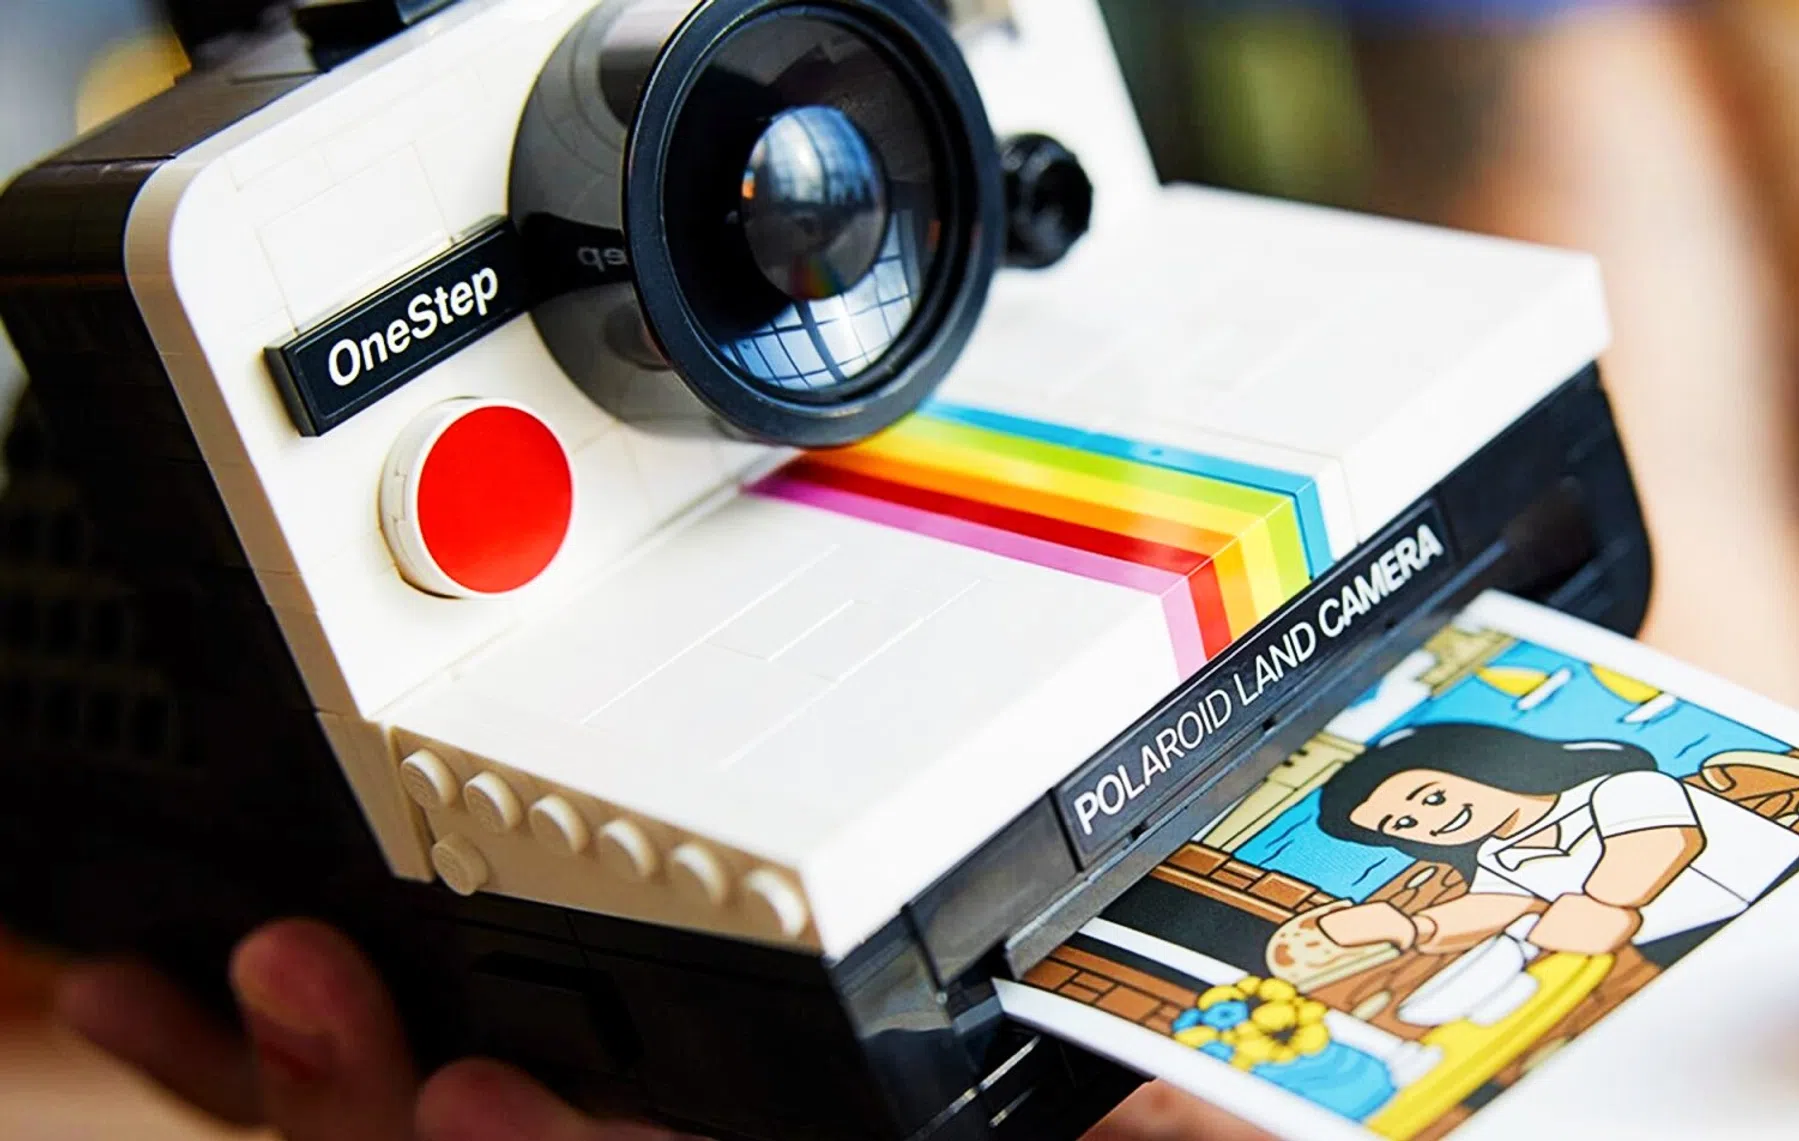 LEGO lanceert Polaroid-camera gemaakt van 516 steentjes